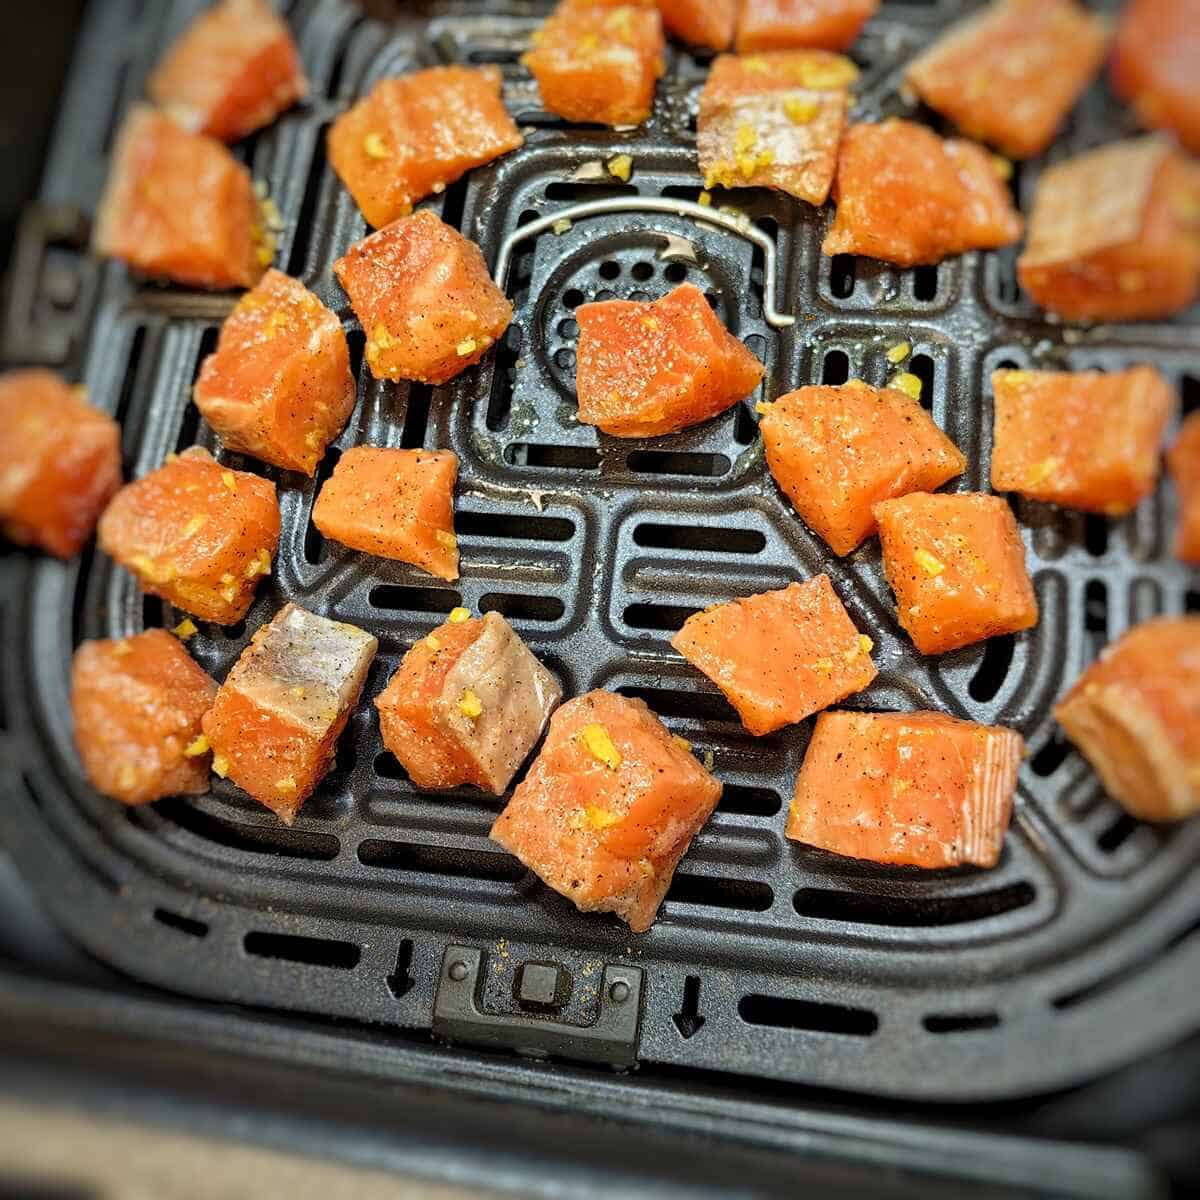 marinated salmon slices inside air fryer basket